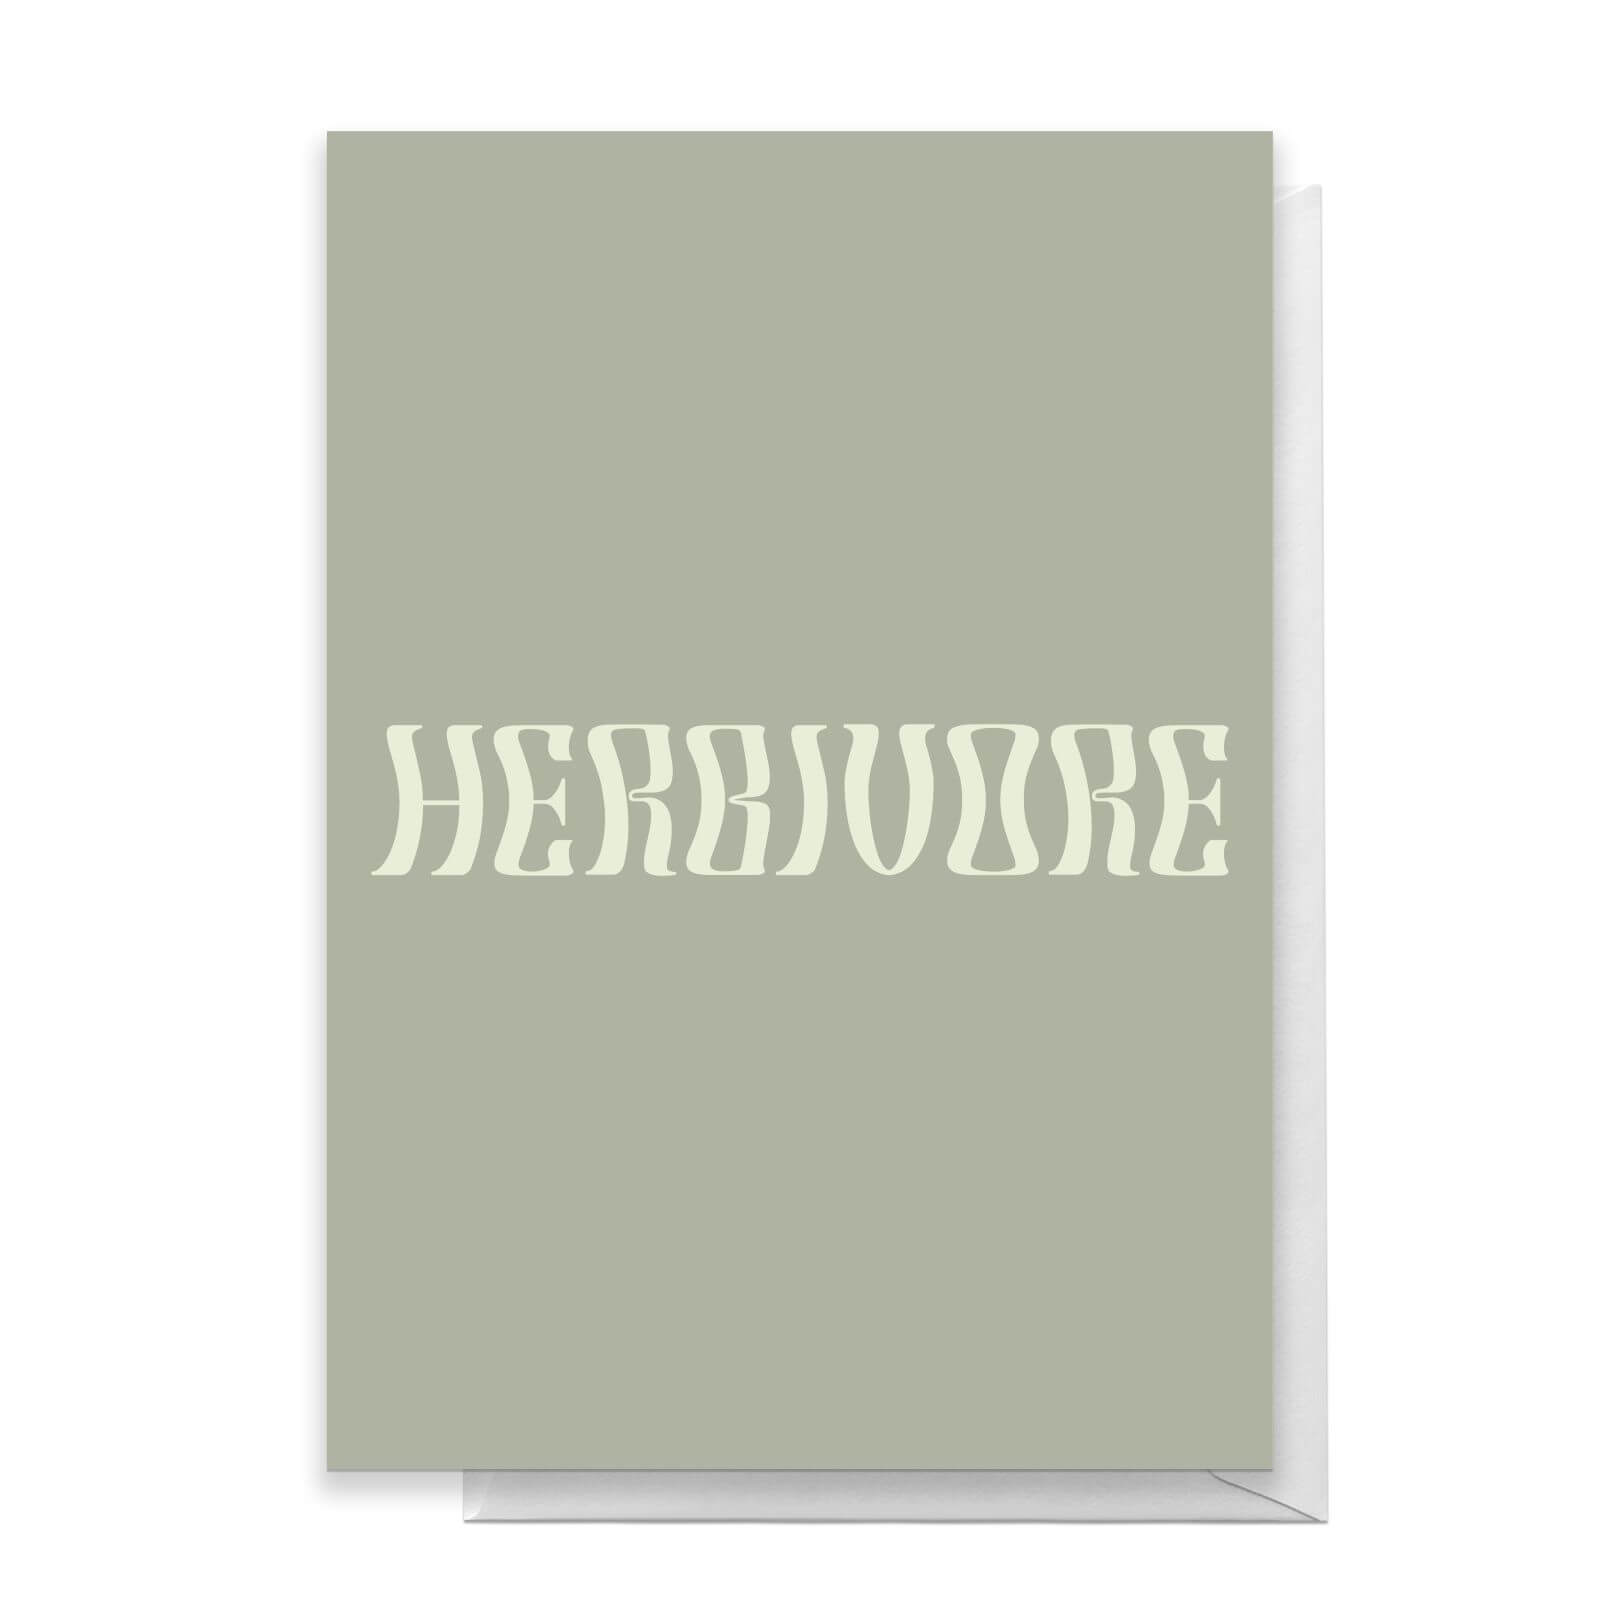 Herbivore Greetings Card - Standard Card